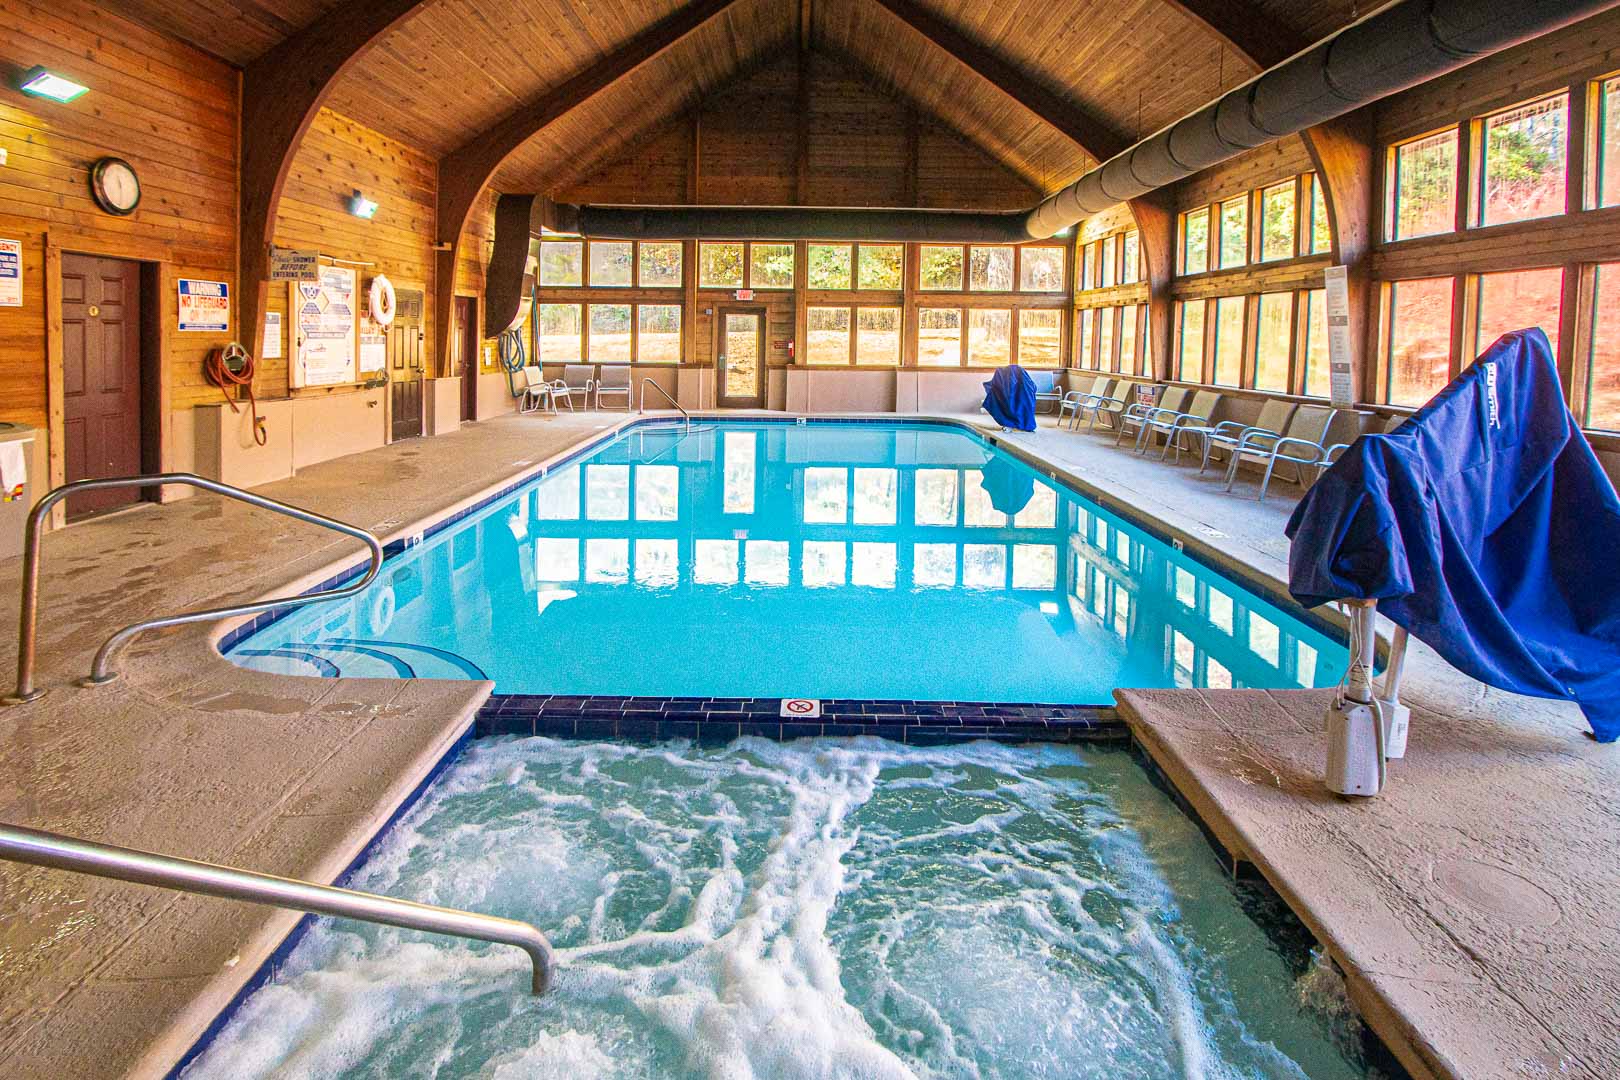 A spacious indoor swimming pool at VRI's Mountain Loft Resort in North Carolina.